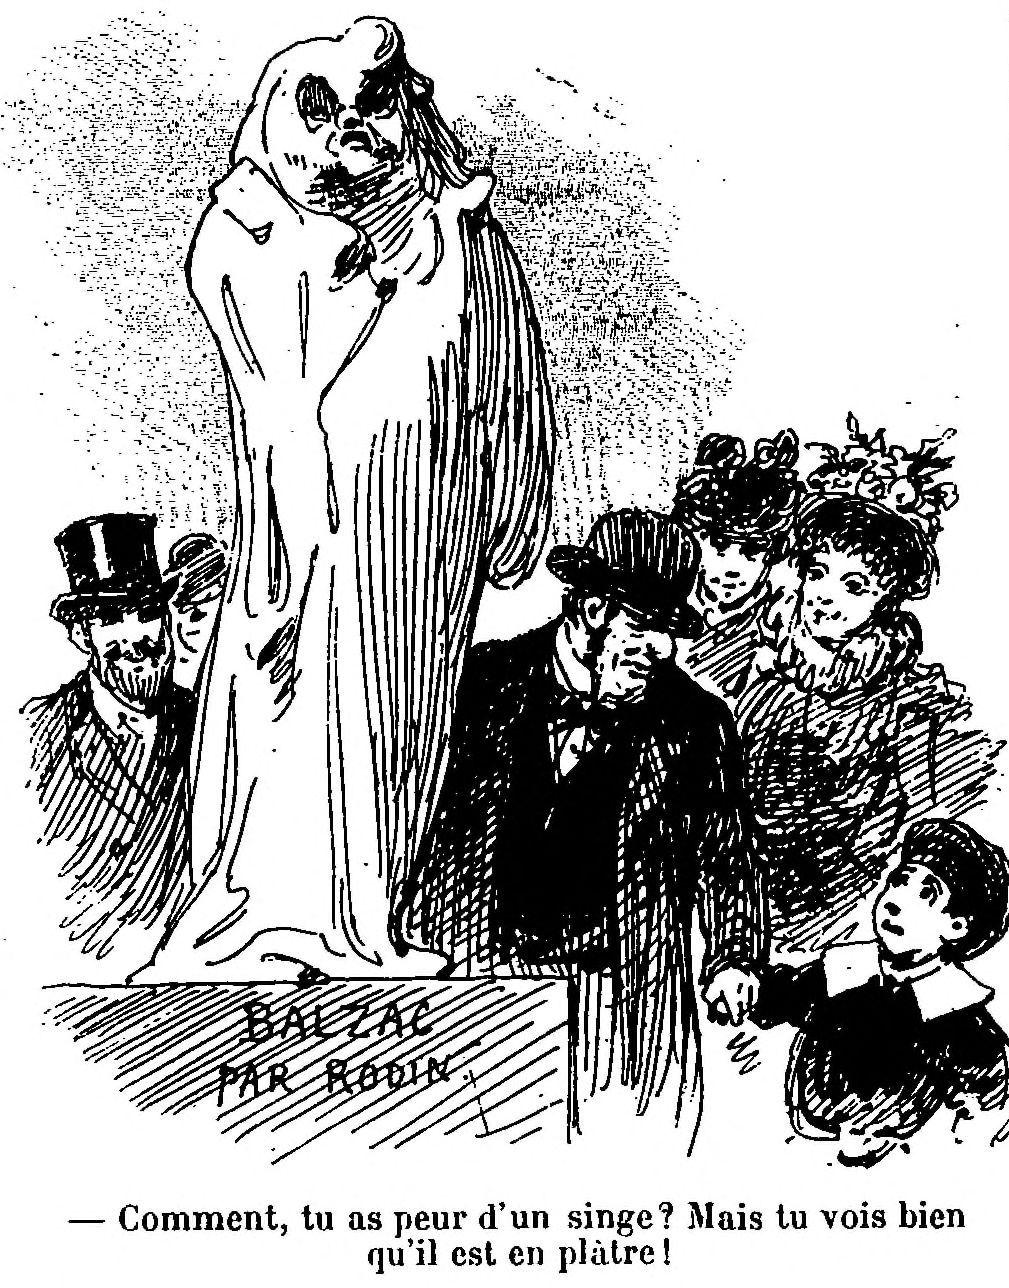 Le Journal amusant, 21 mai 1898 - source : Gallica-BnF